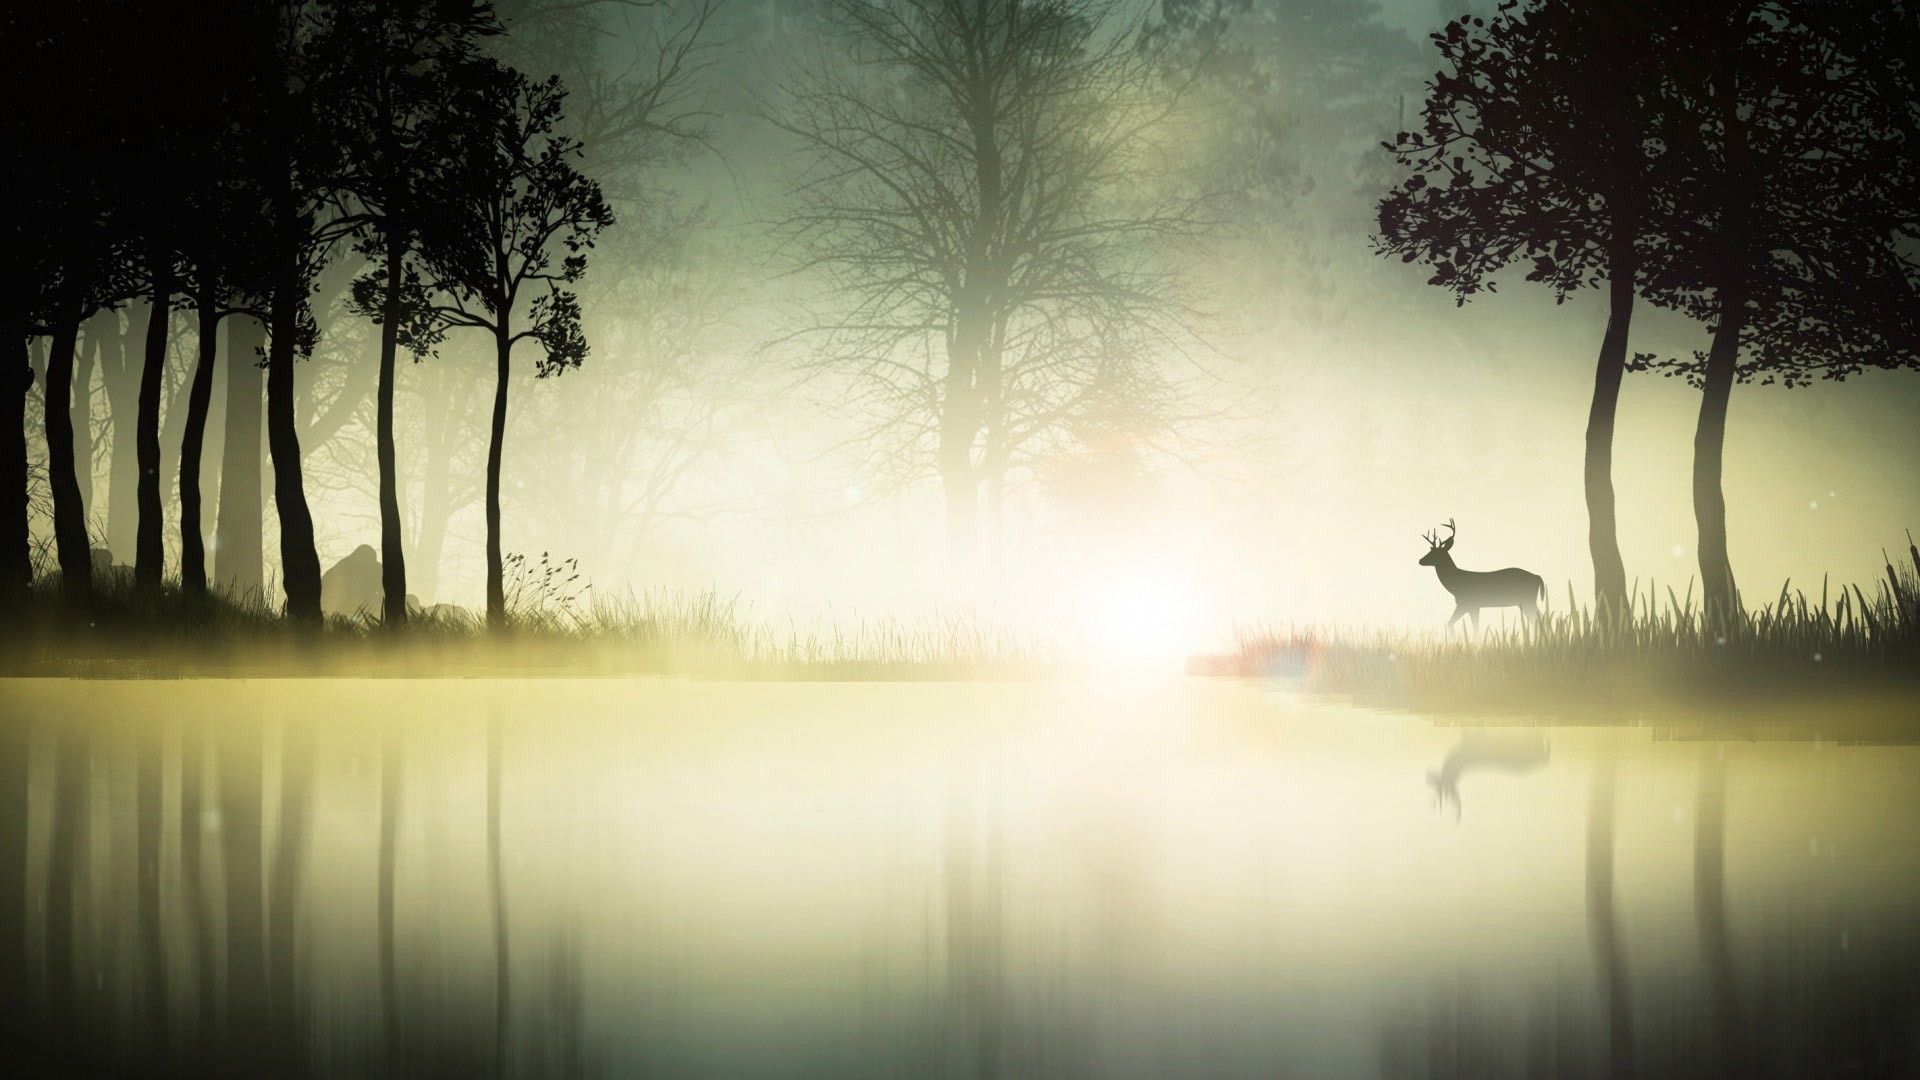 digital Art, Fantasy Art, Animals, Deer, Nature, Landscape, Trees, Water, Mist, Silhouette, Reflection Wallpaper